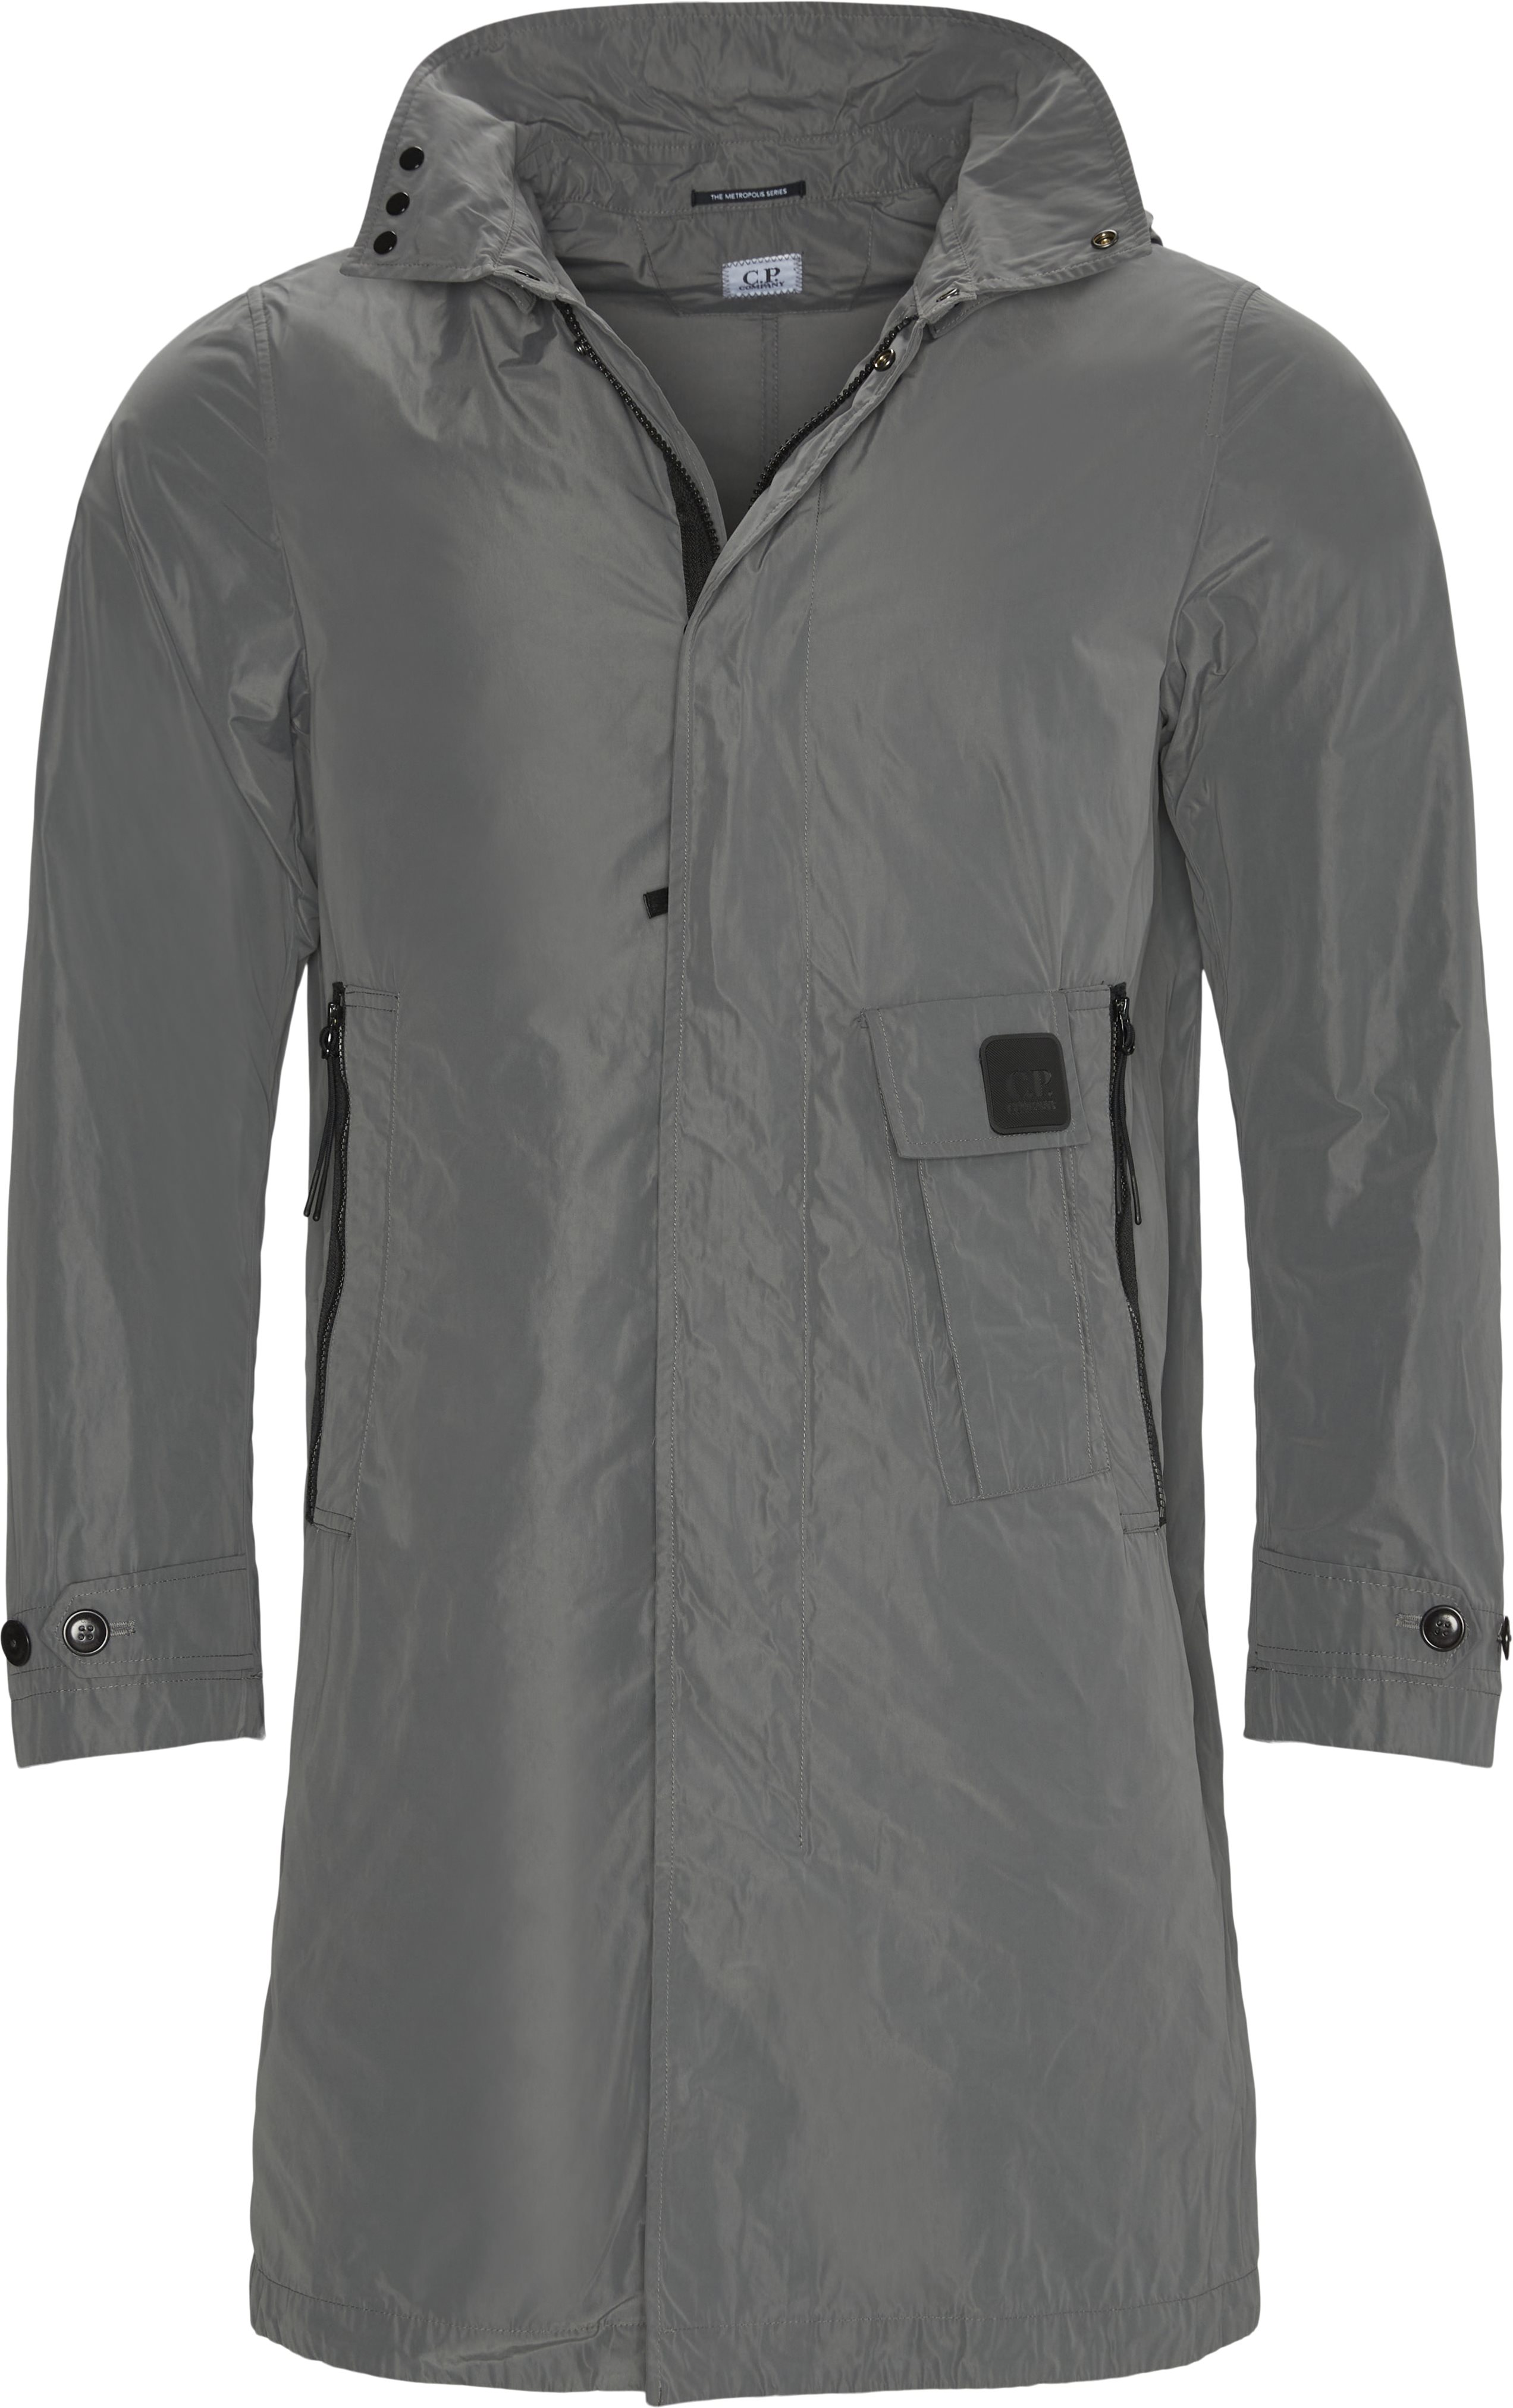 Jackets - Regular fit - Grey